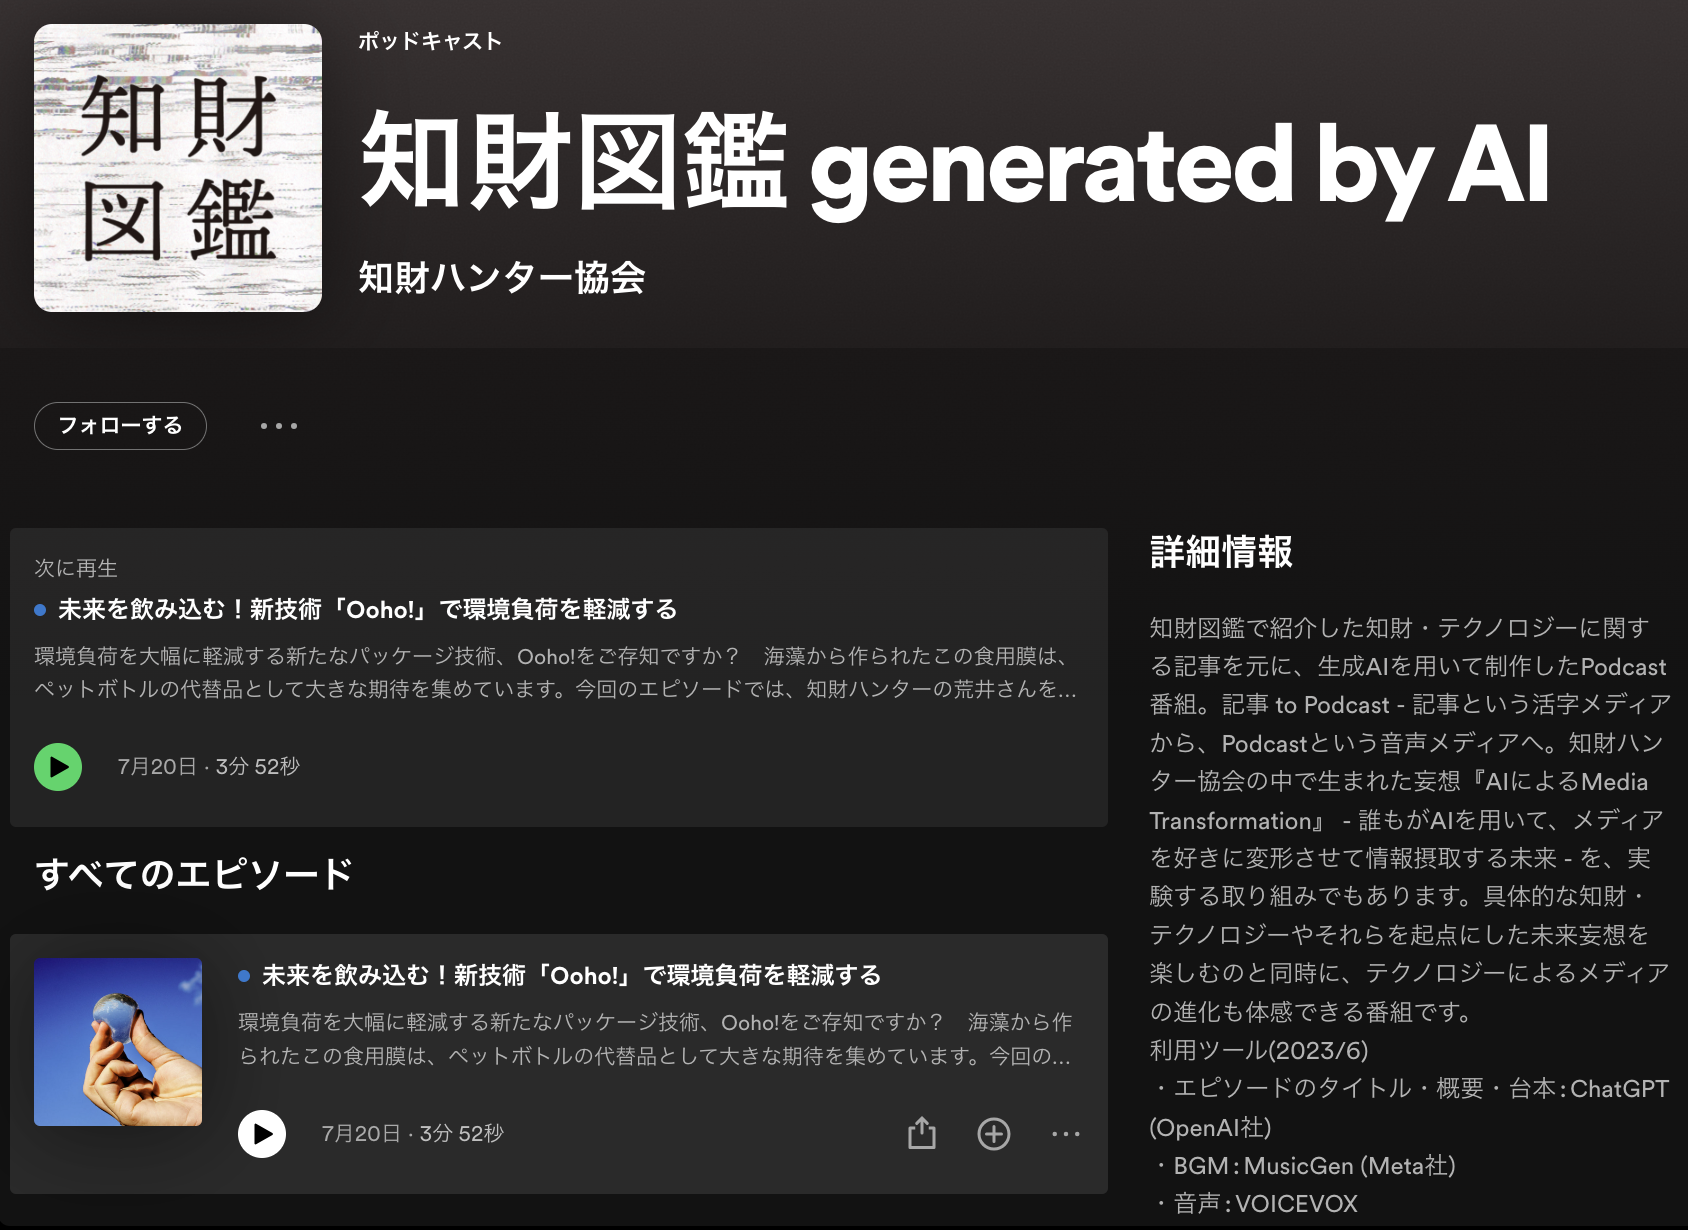 知財図鑑 generated by AI